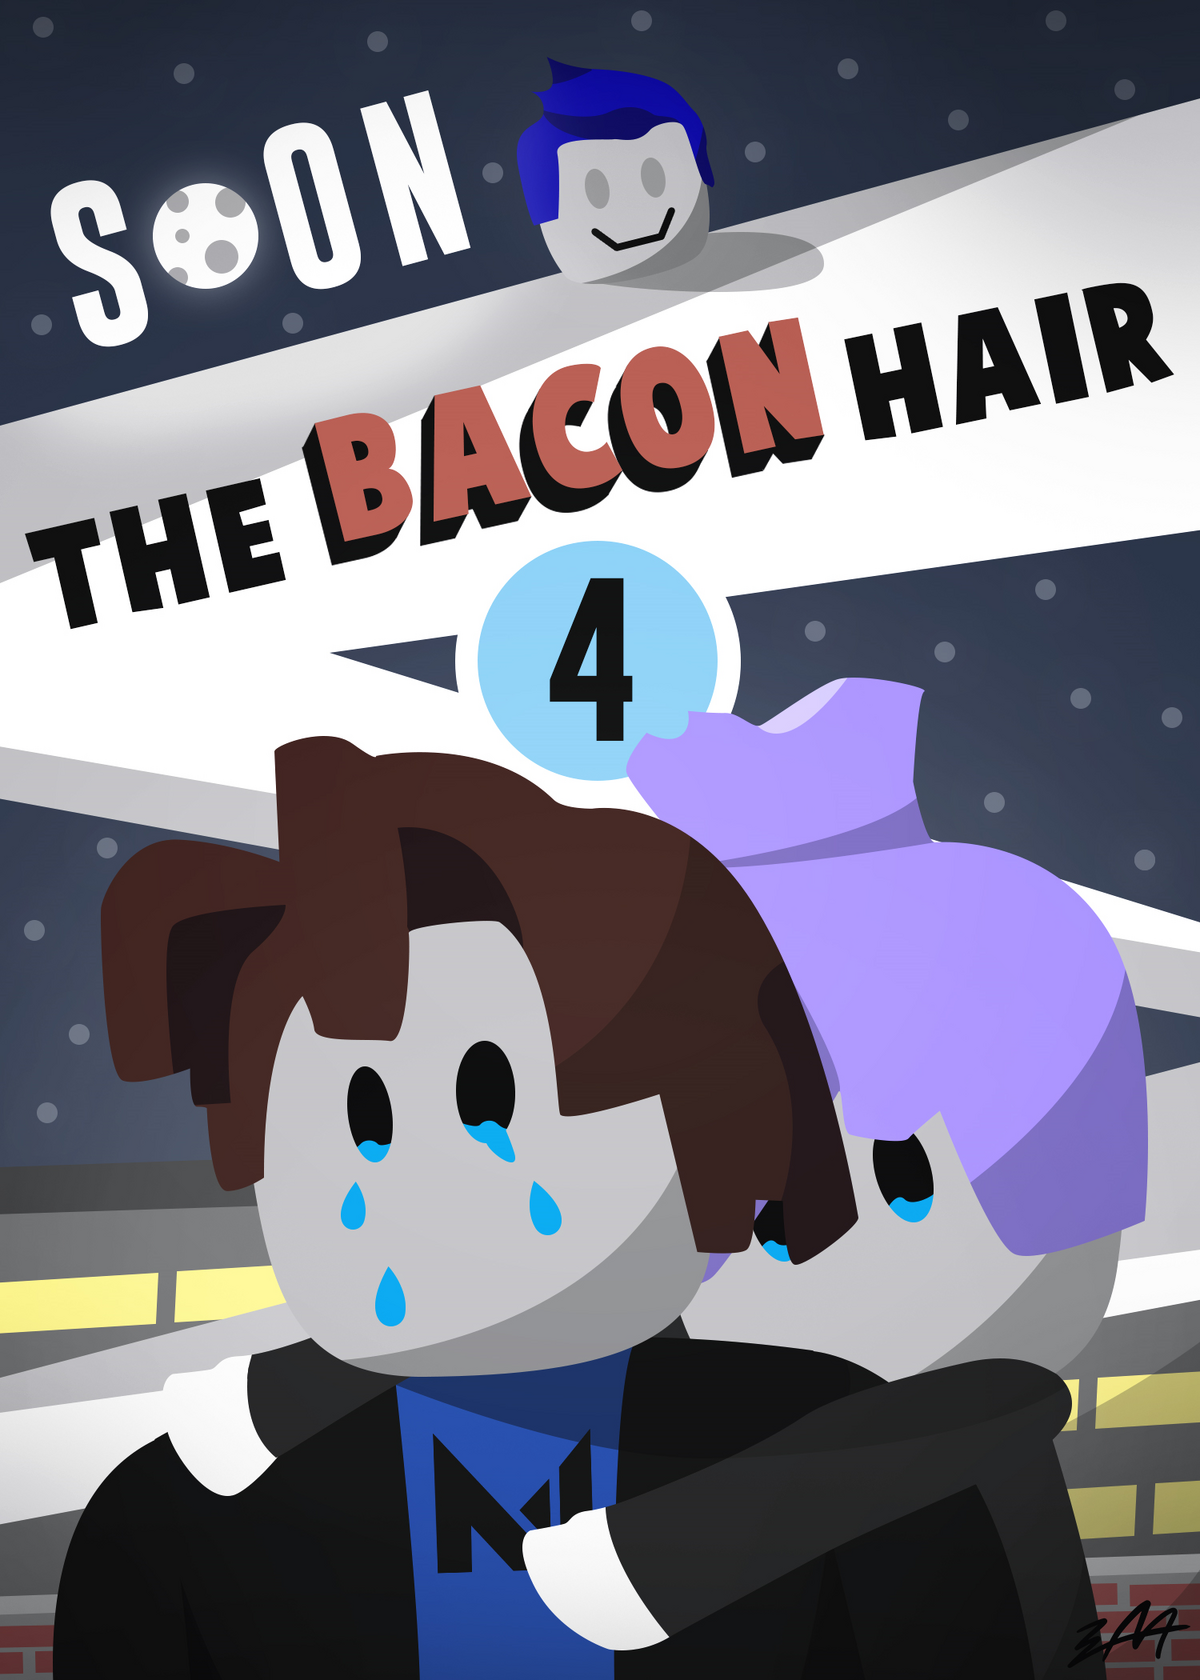 Bacon hair catologo, Wiki